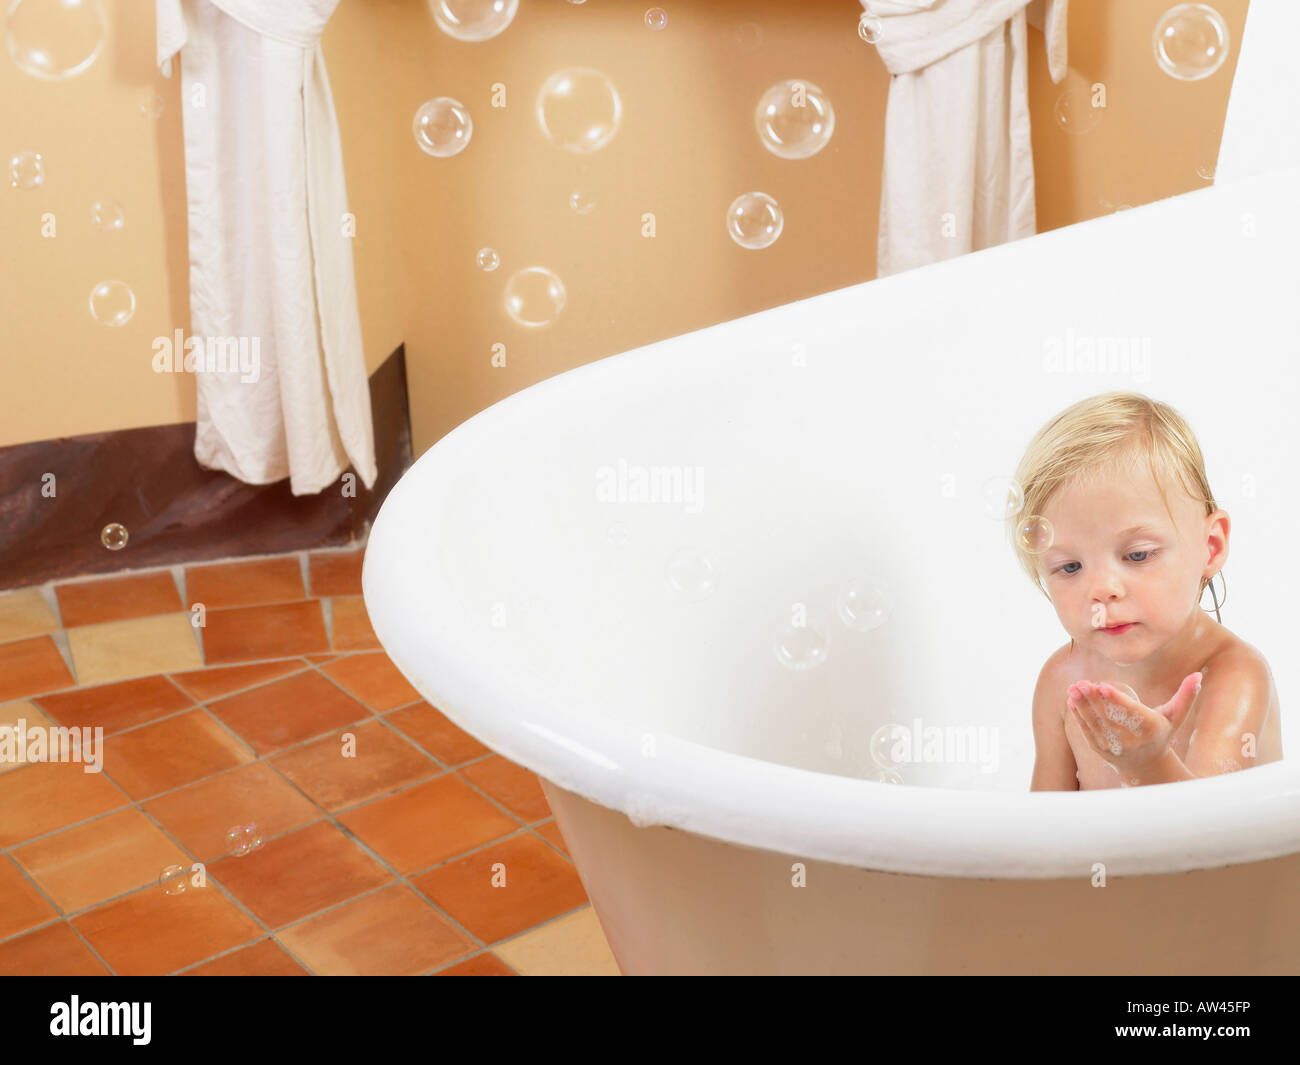 Little girl taking a bath bubbles. Stock Photo